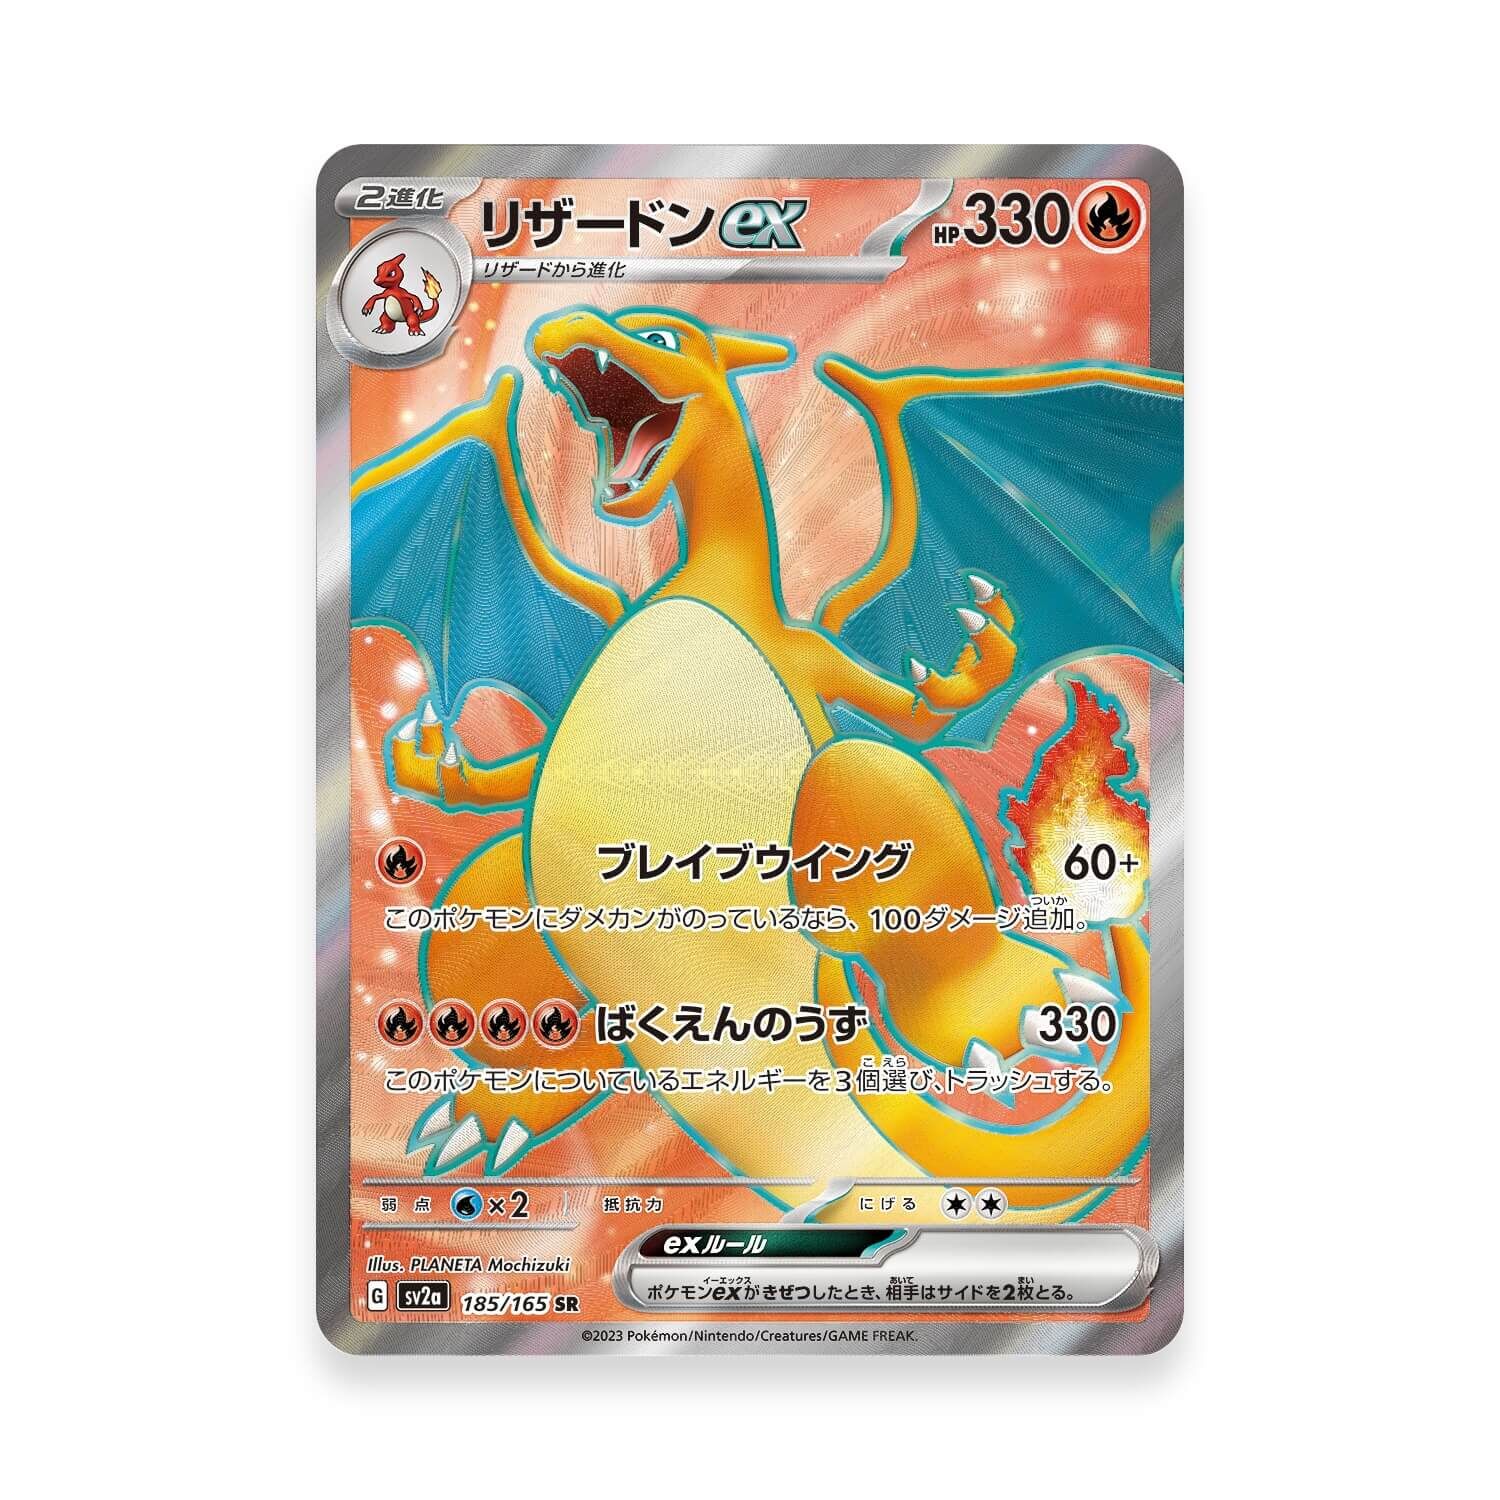 Charizard ex 185/165 - Pokémon 151 (JAP)